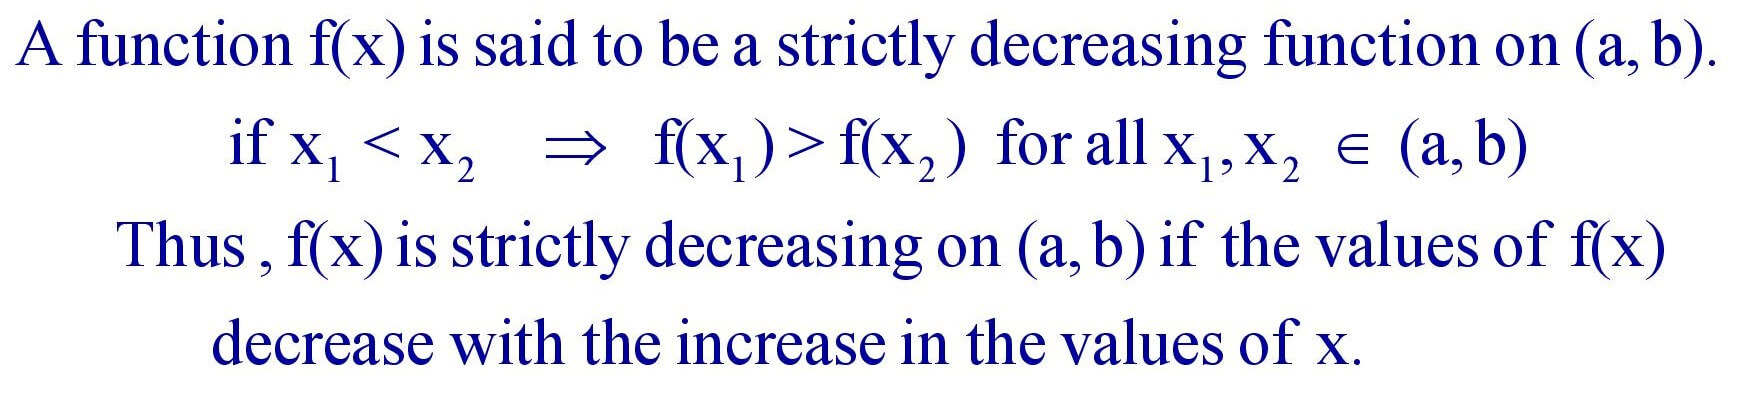 Strictly decreasing function